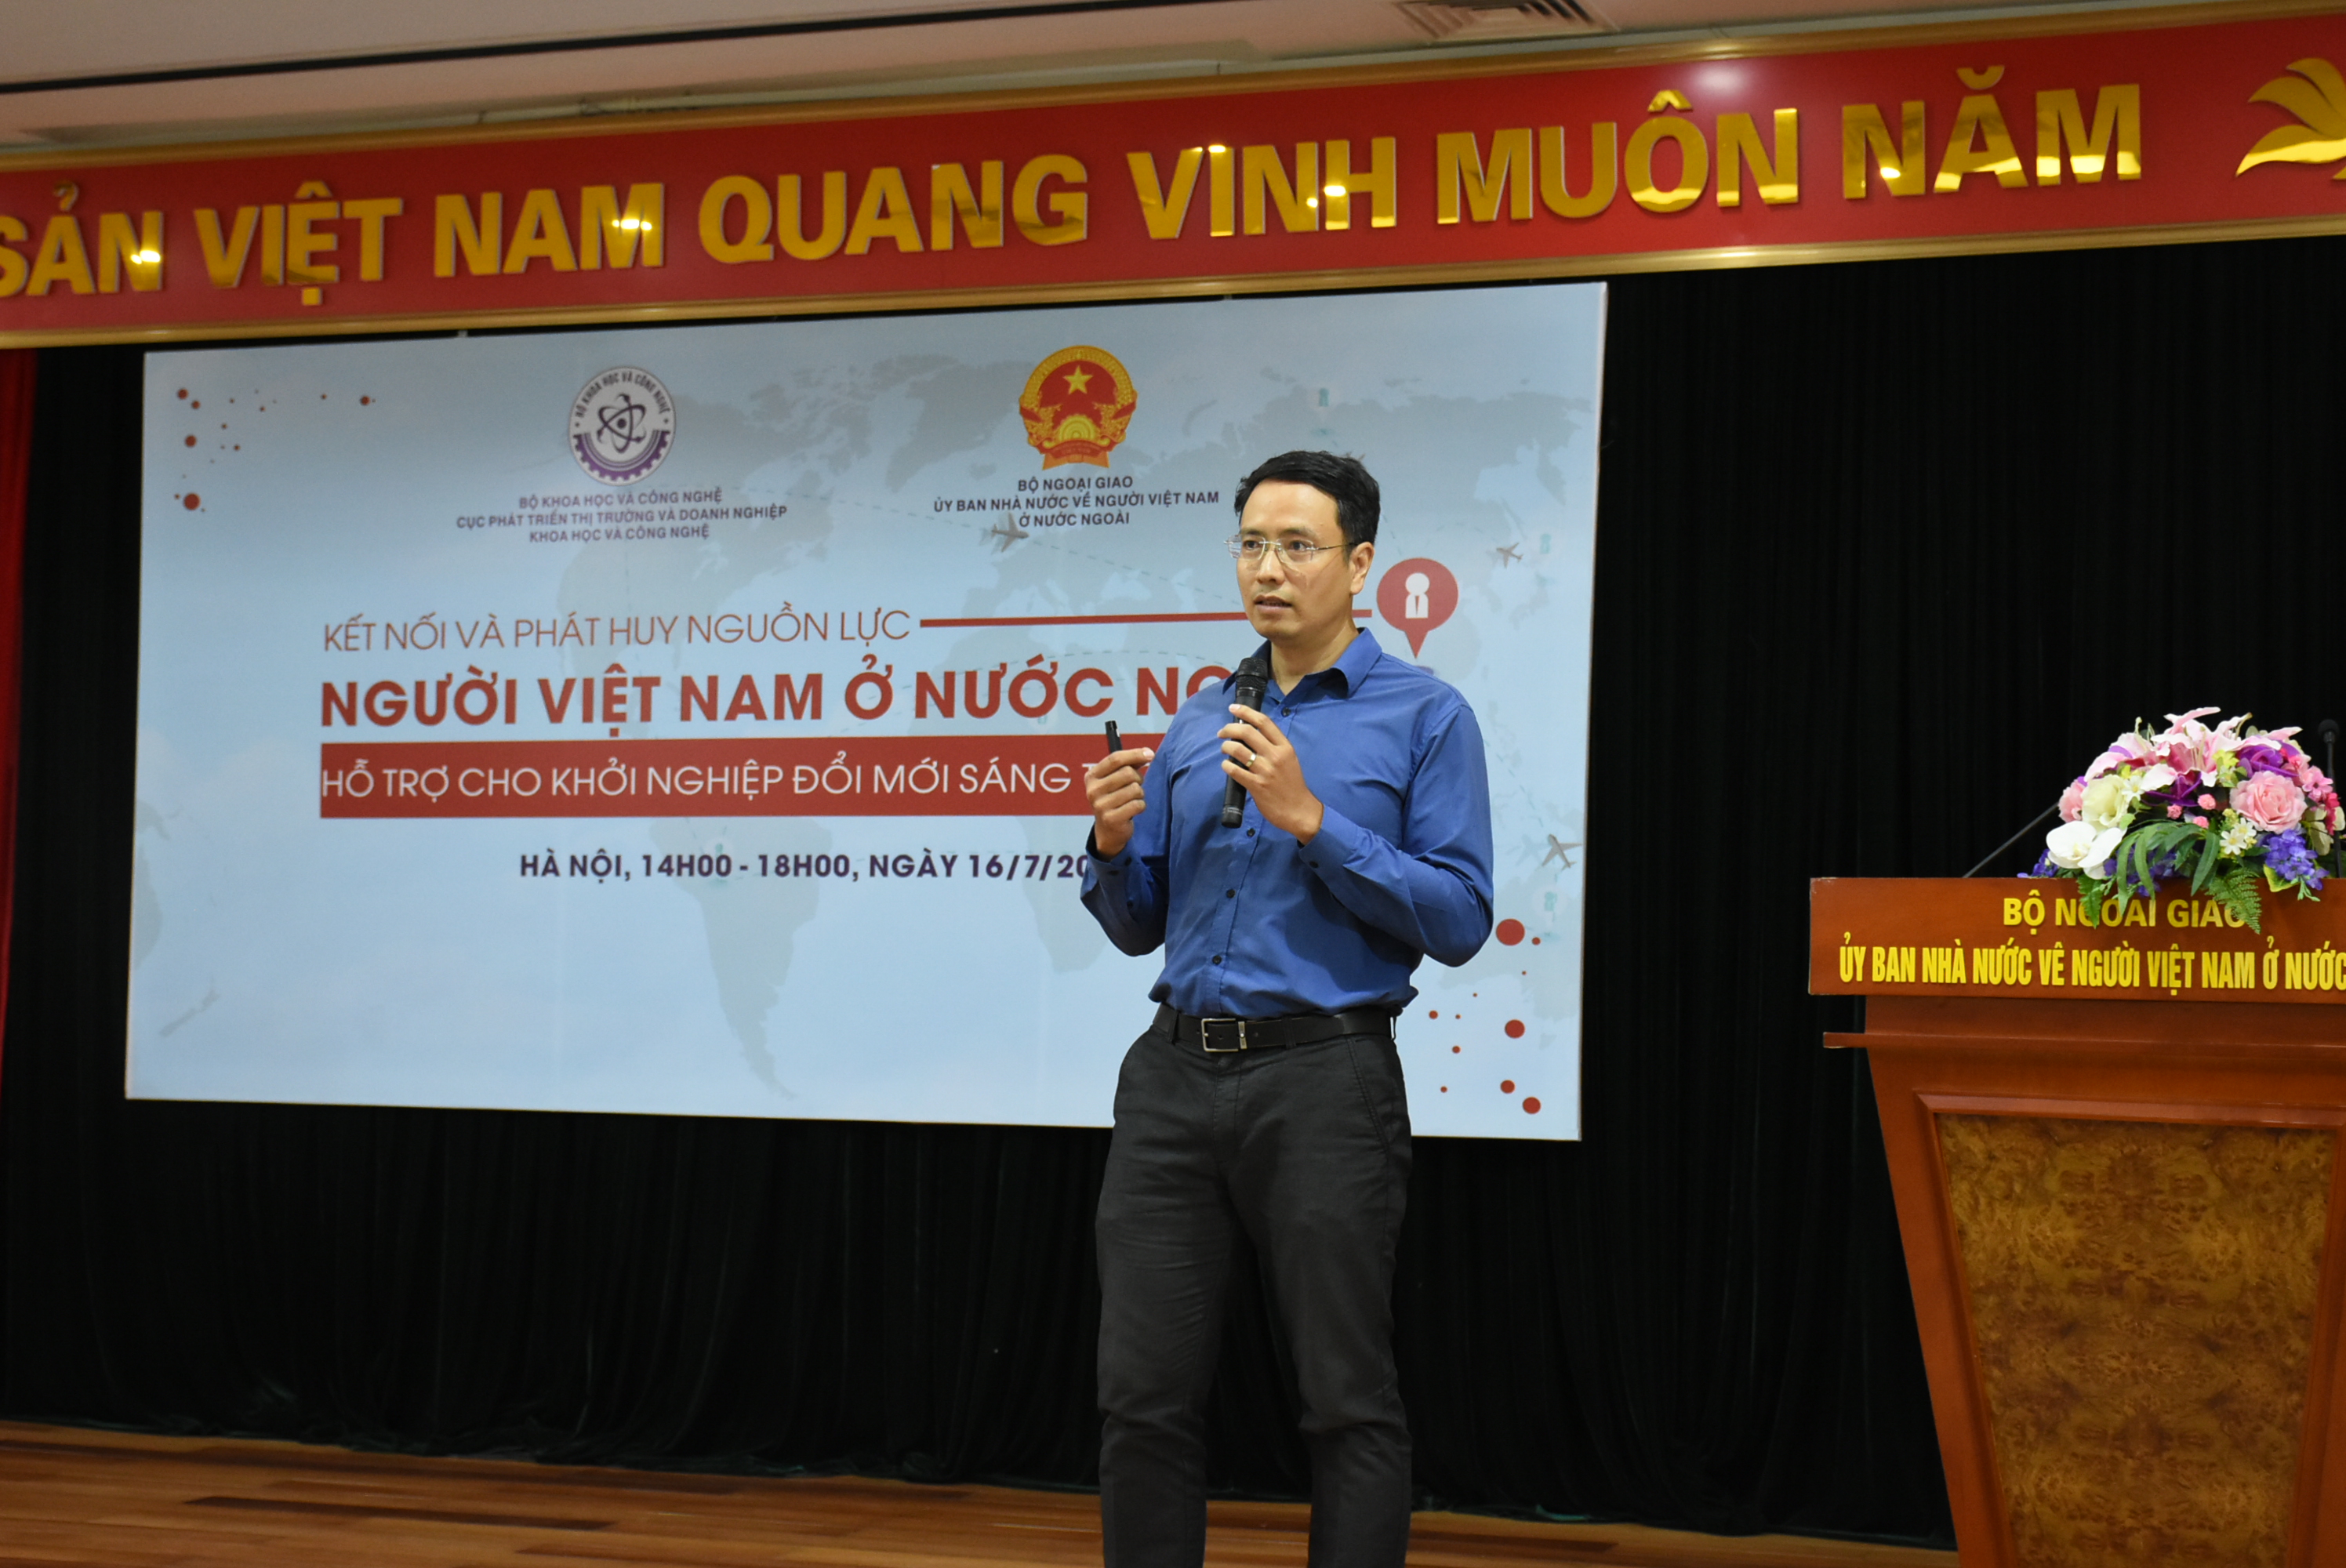 Vietnamese entrepreneur in pursuit of understanding Asian genomes